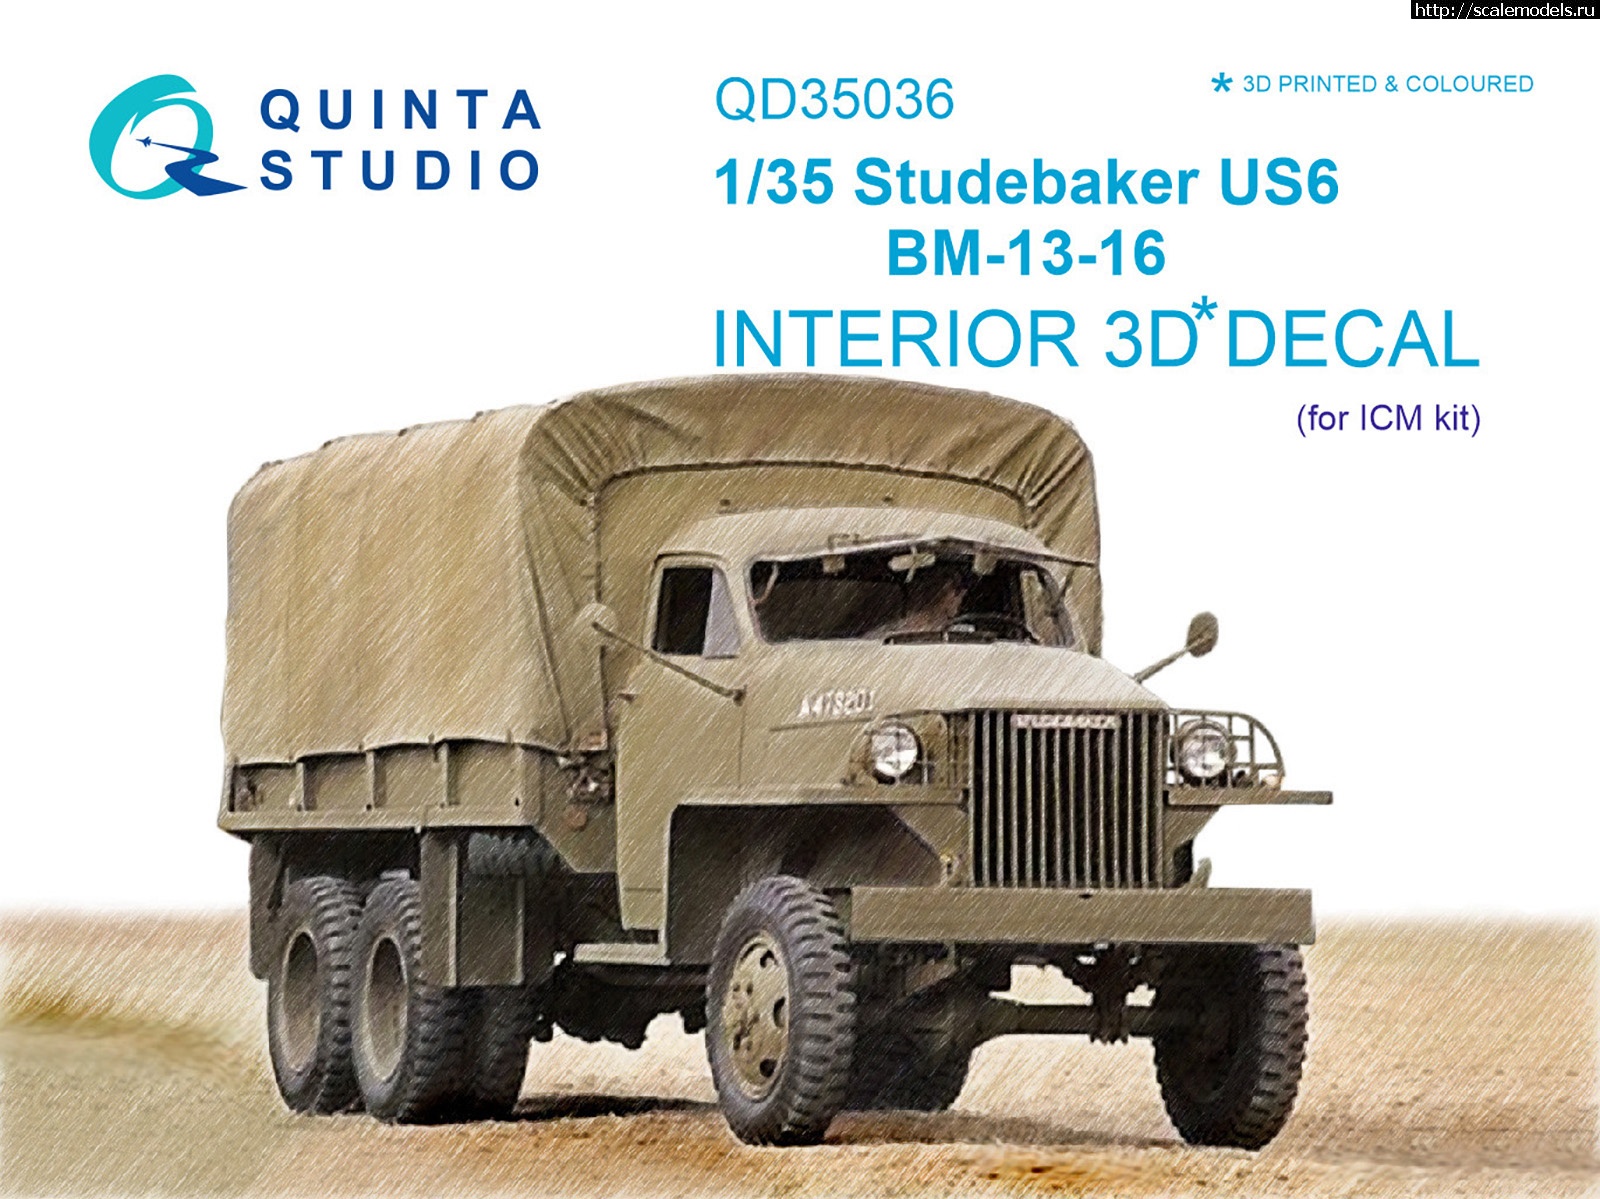 1641882336_Cover-QD35036.jpg :   Quinta Studio     